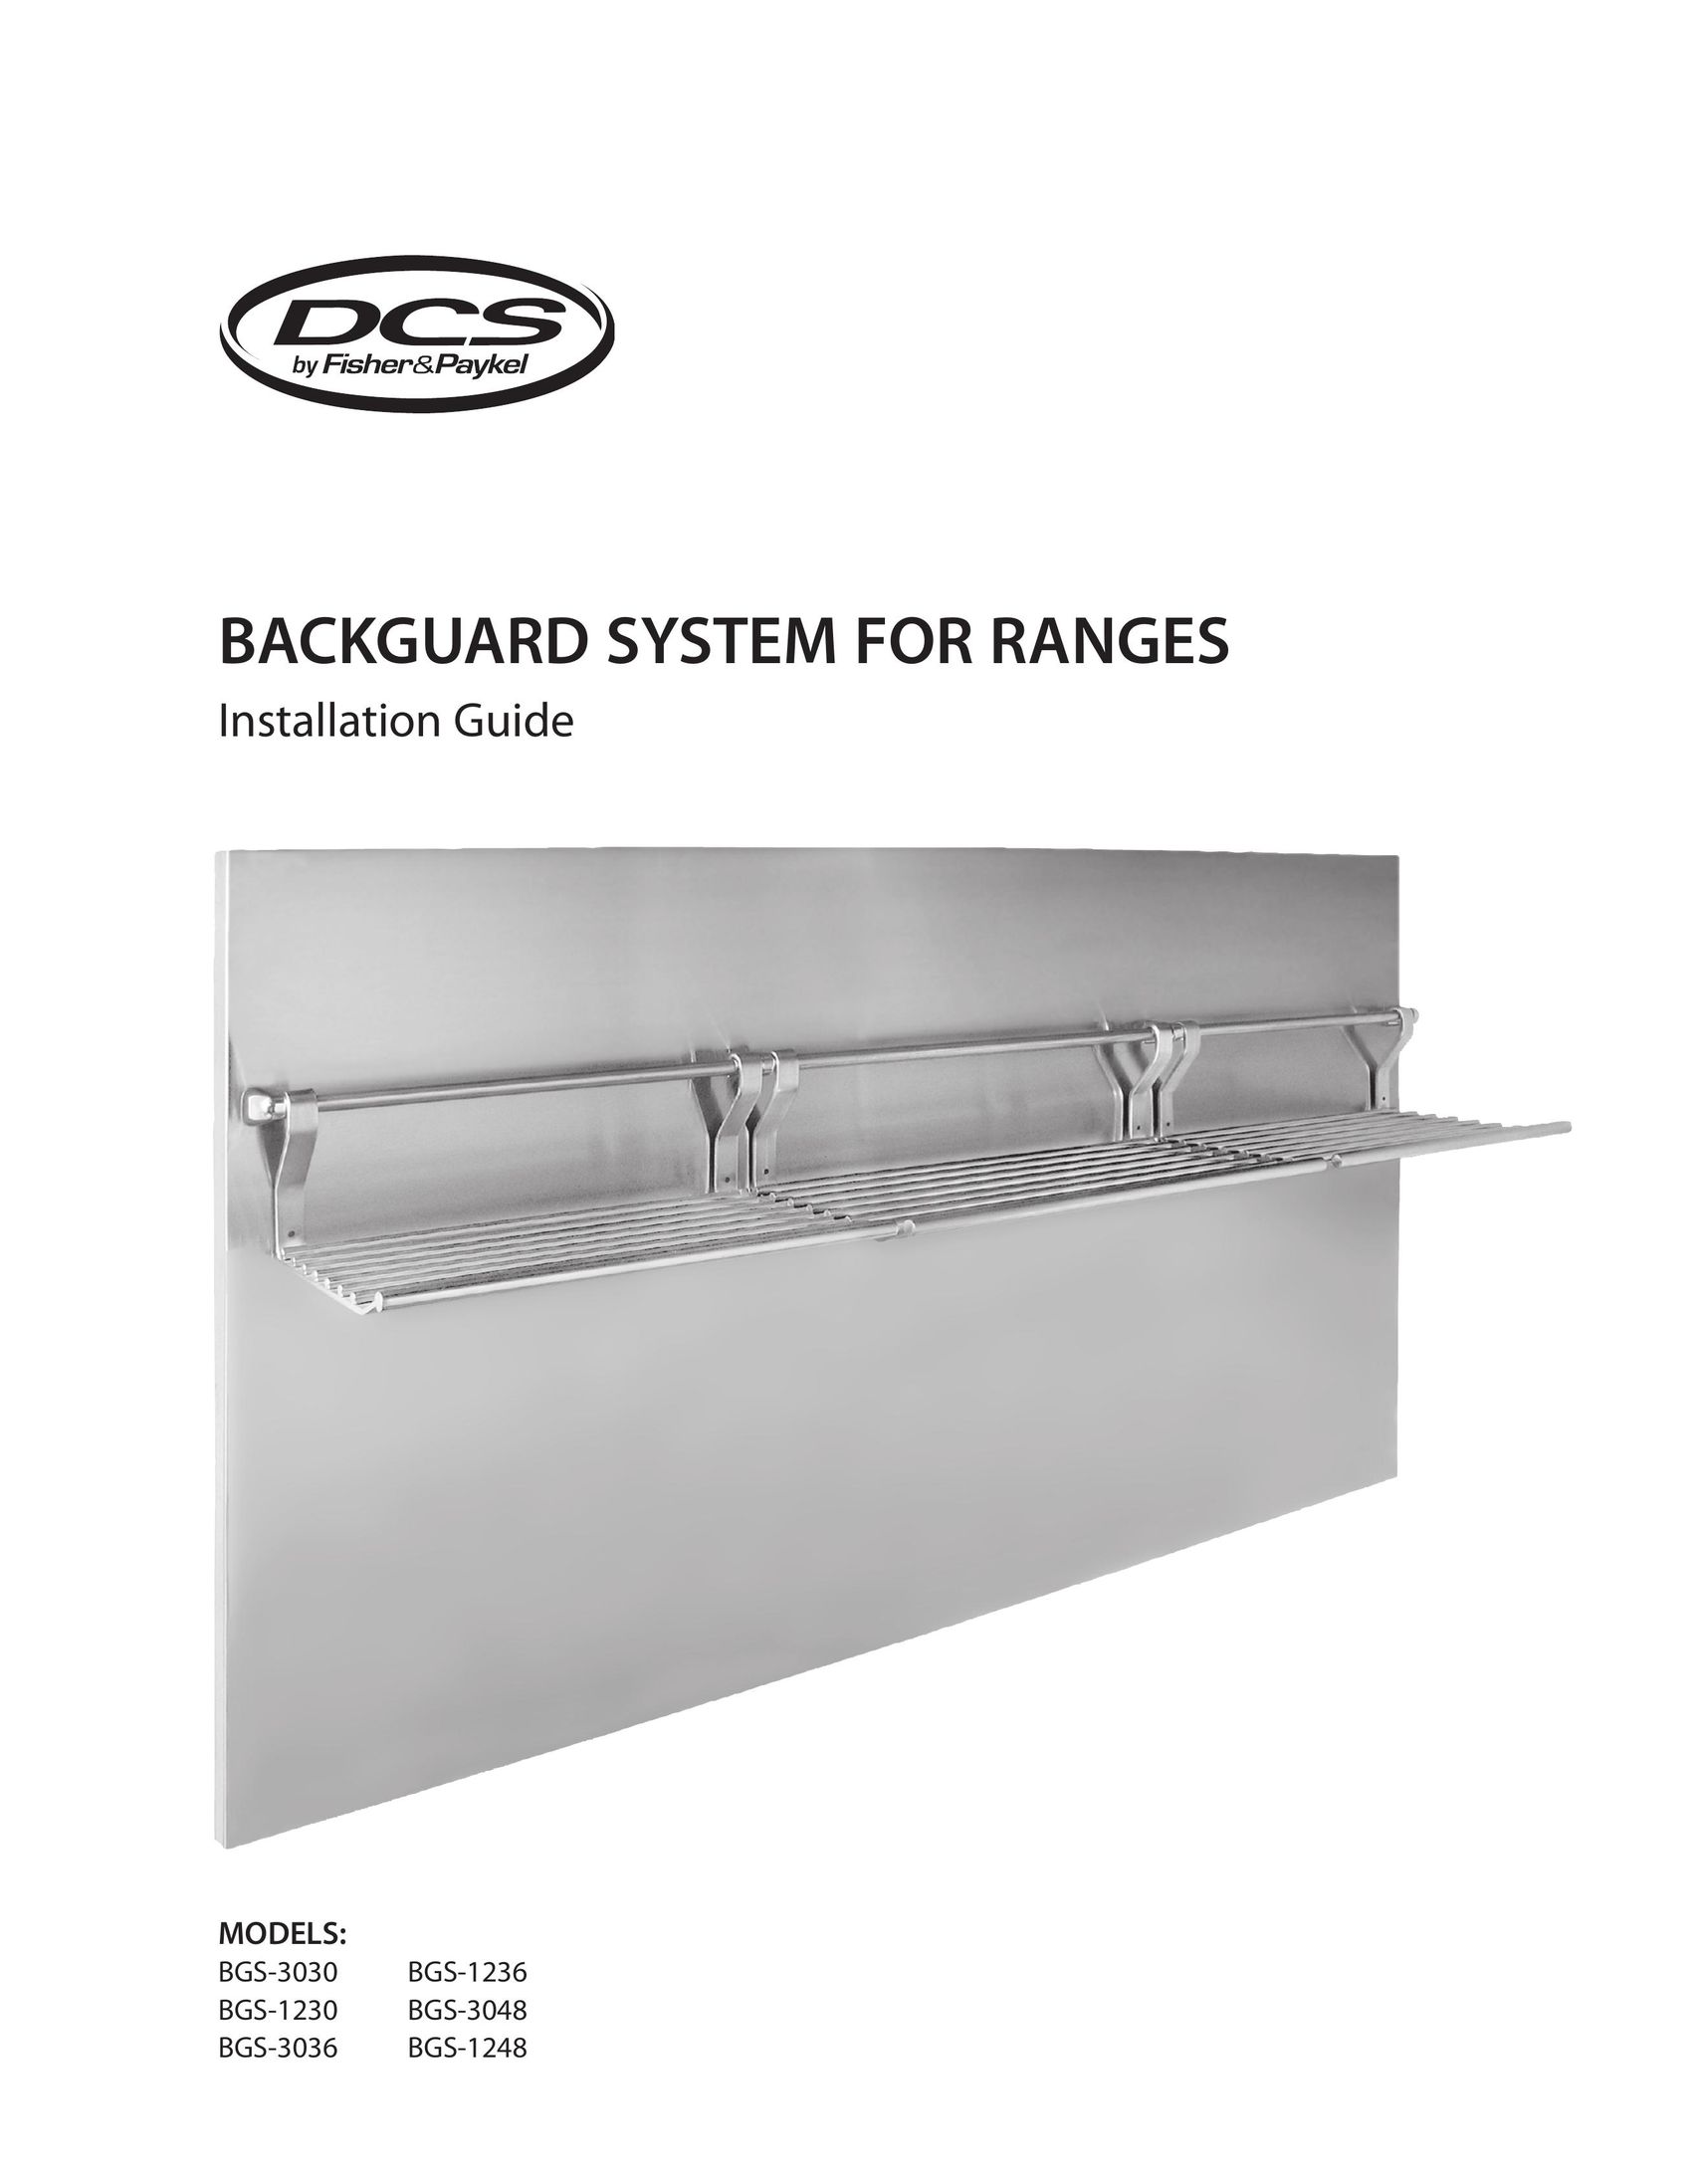 DCS BGS-3036 Range User Manual